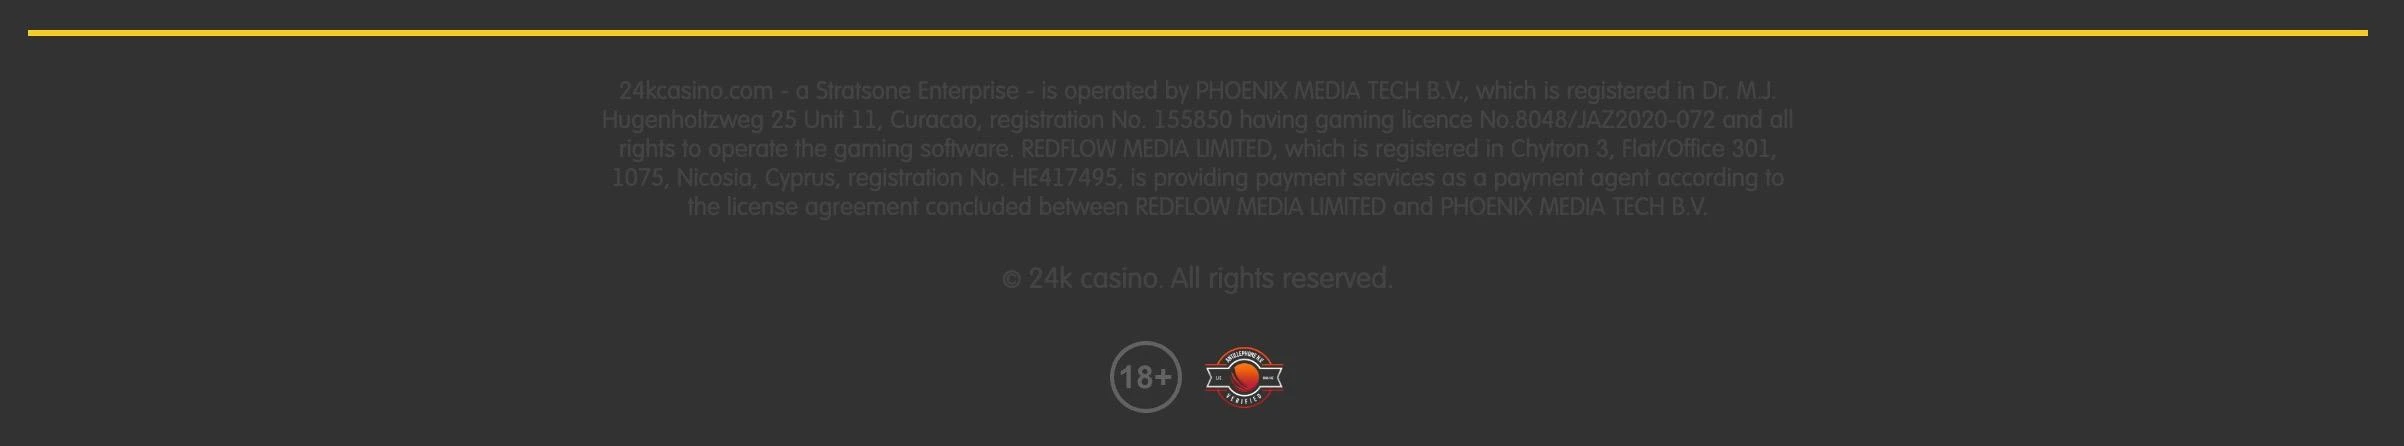 24k casino licence